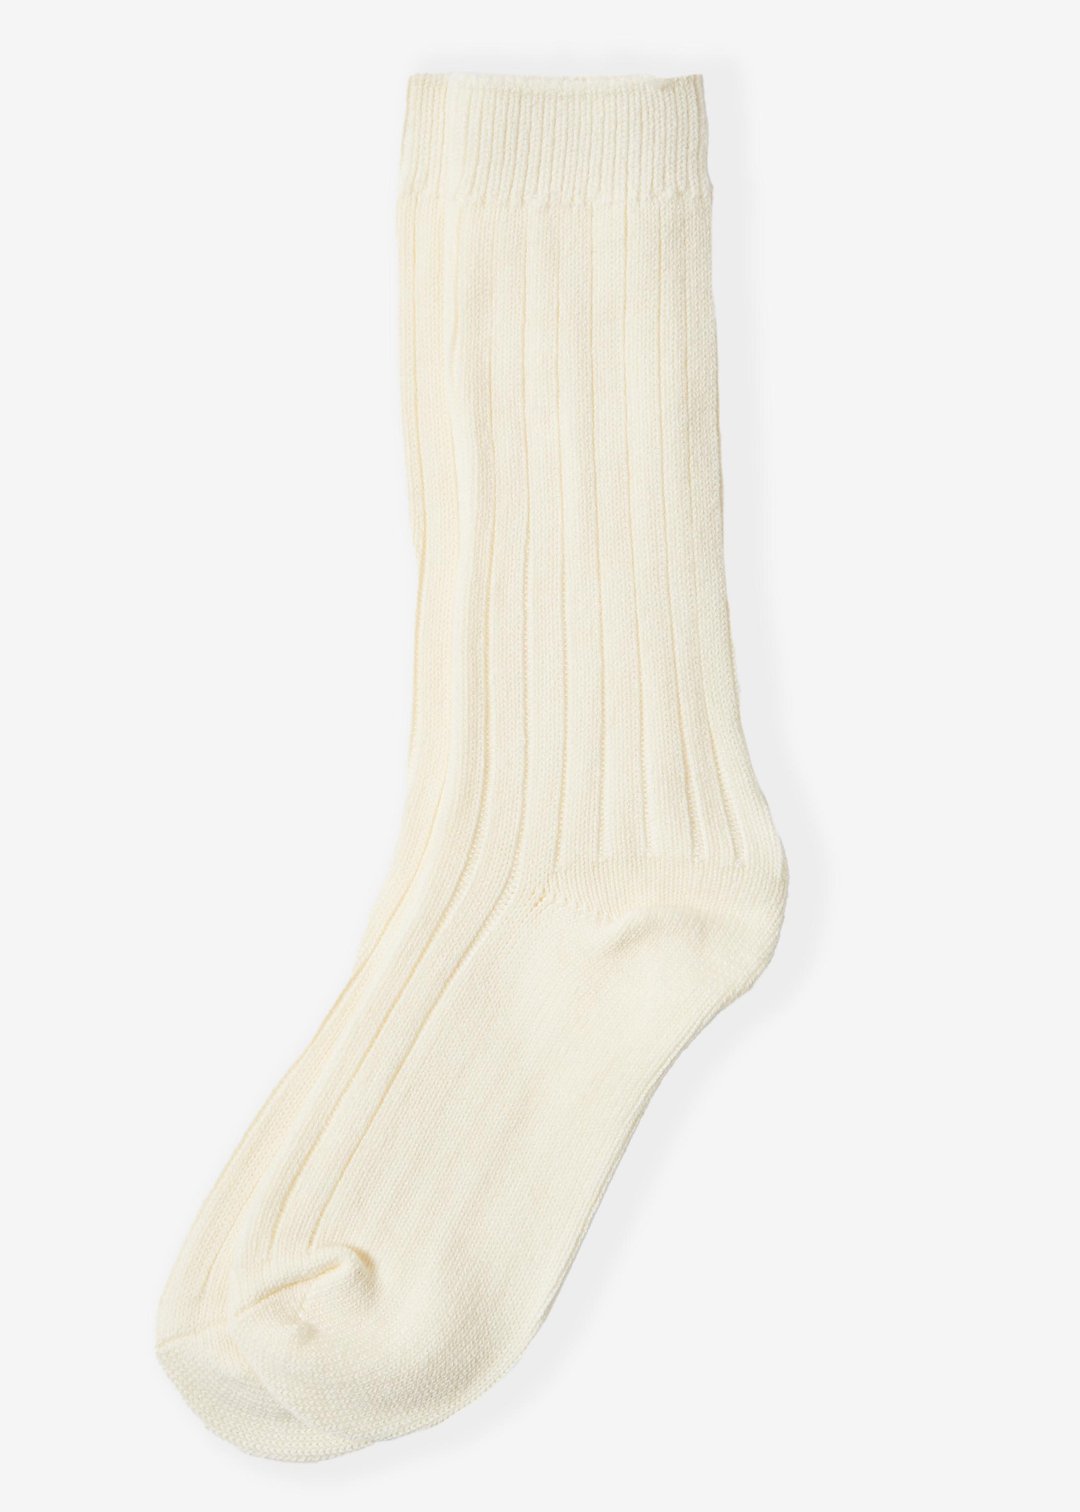 Cream Wool Blend Socks